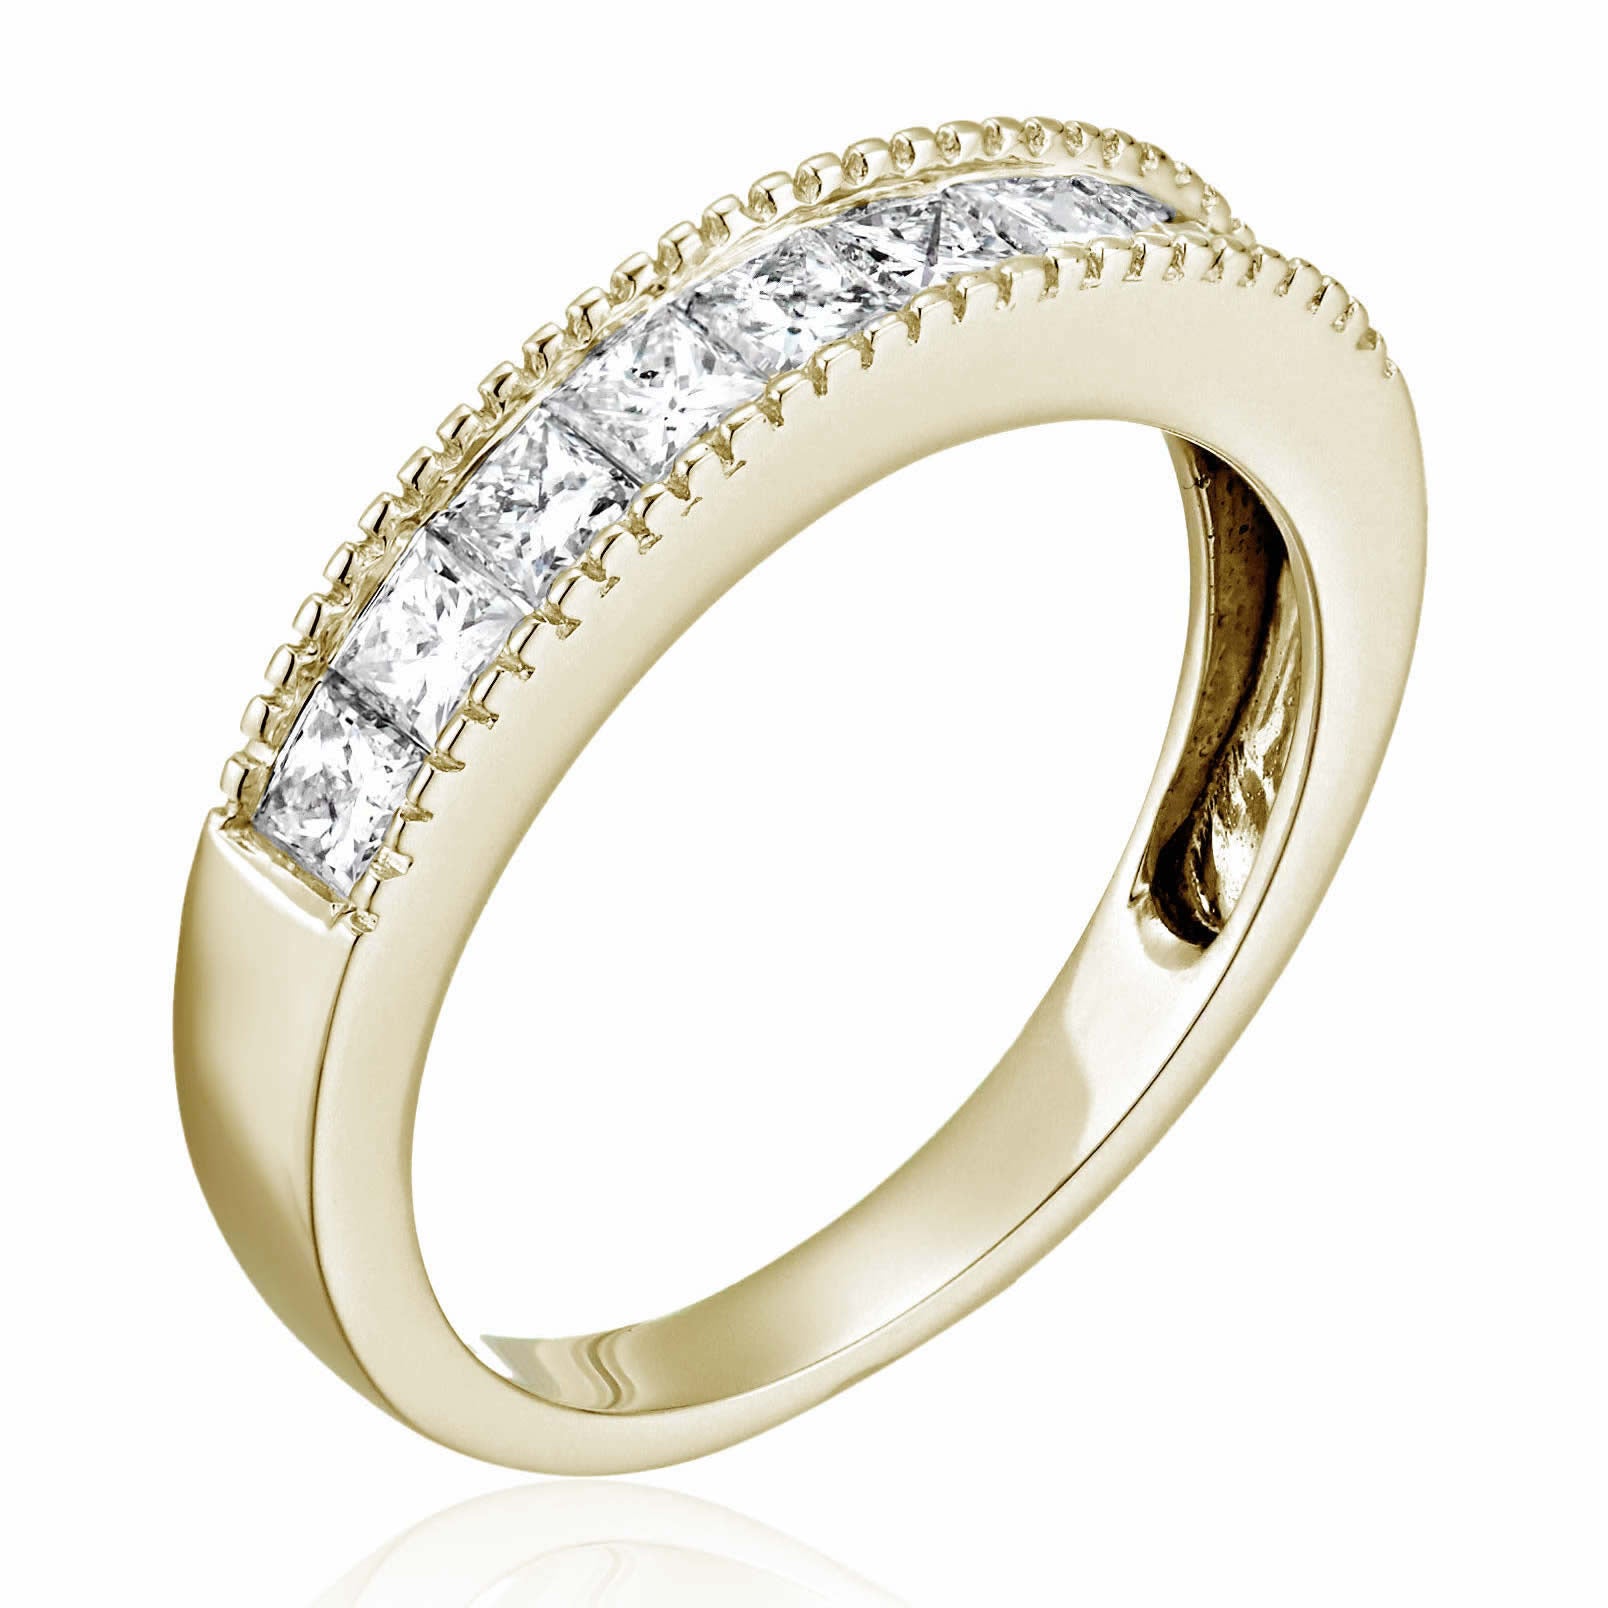 1 cttw Diamond Wedding Band for Women, Princess Cut Diamond Wedding Band 14K Yellow Gold with Milgrain, Size 4.5-9.5